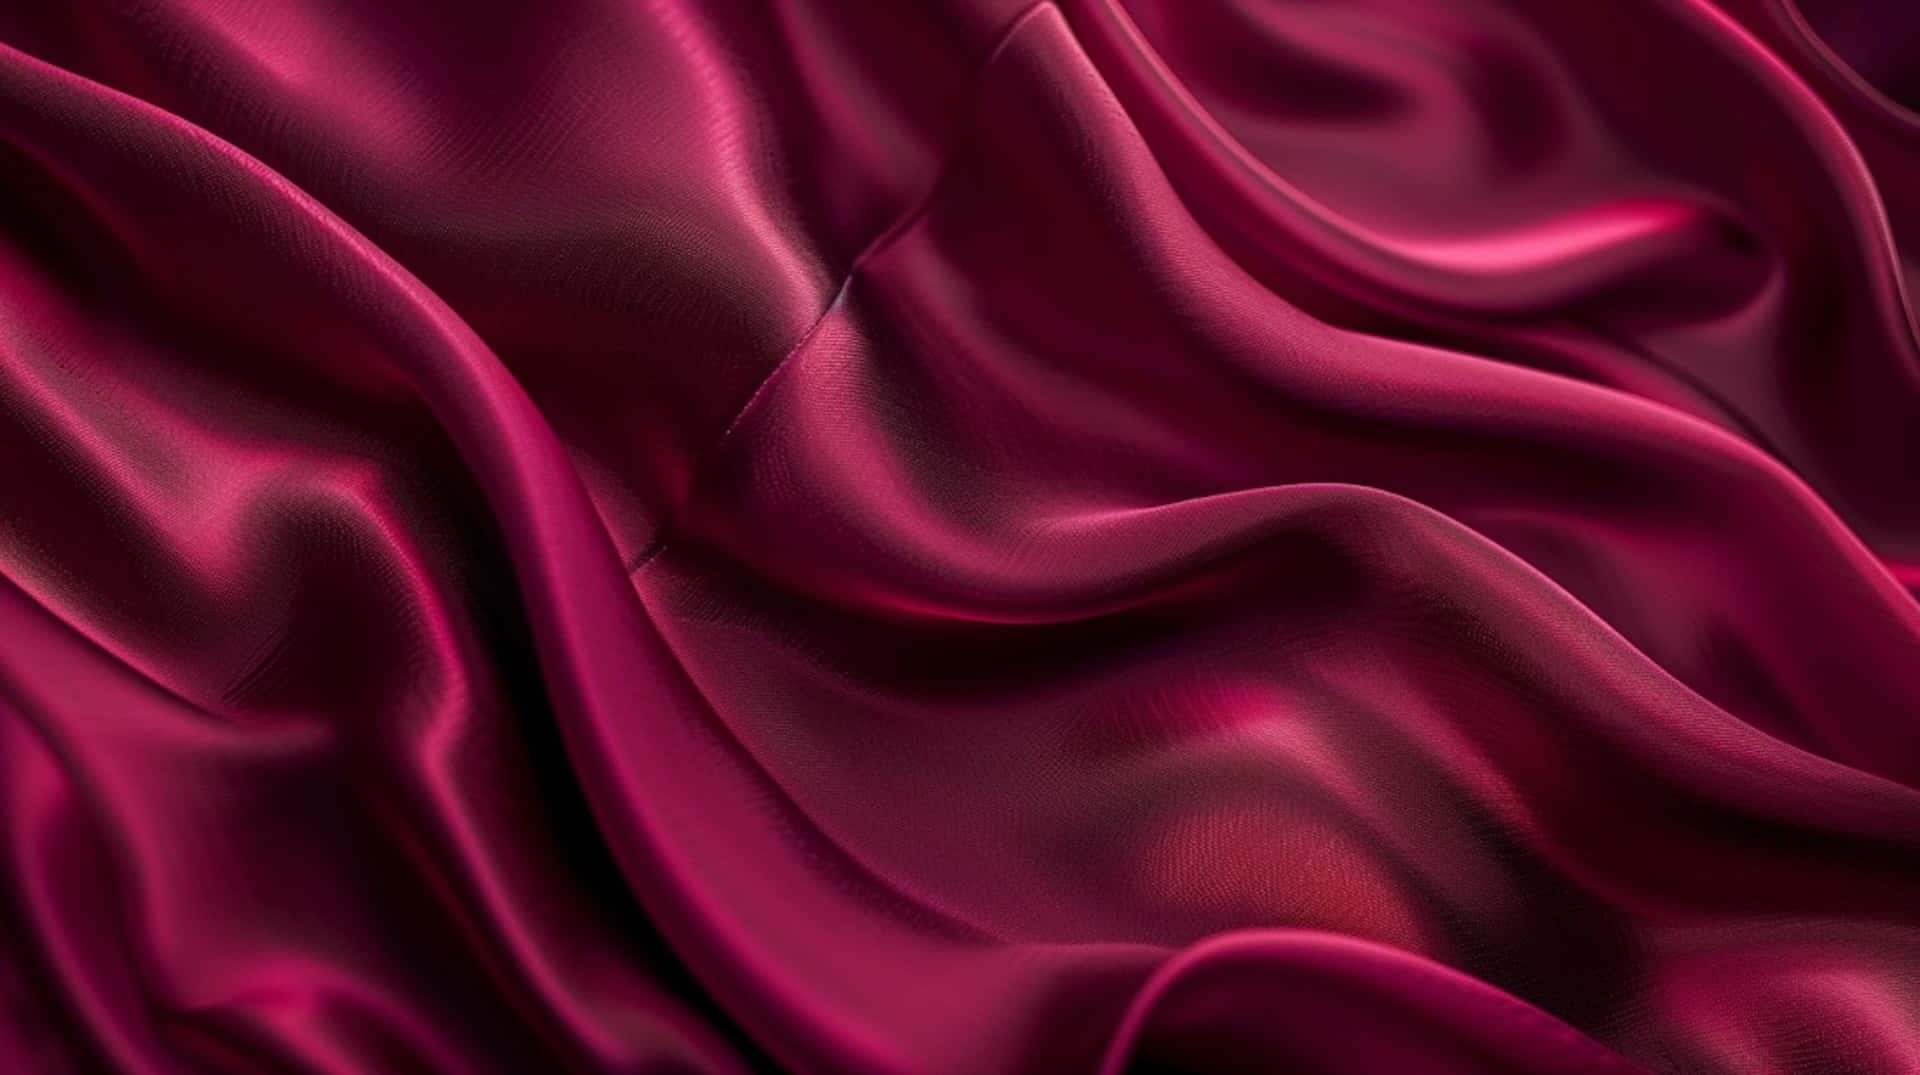 Burgundy Satin Fabric Texture Wallpaper